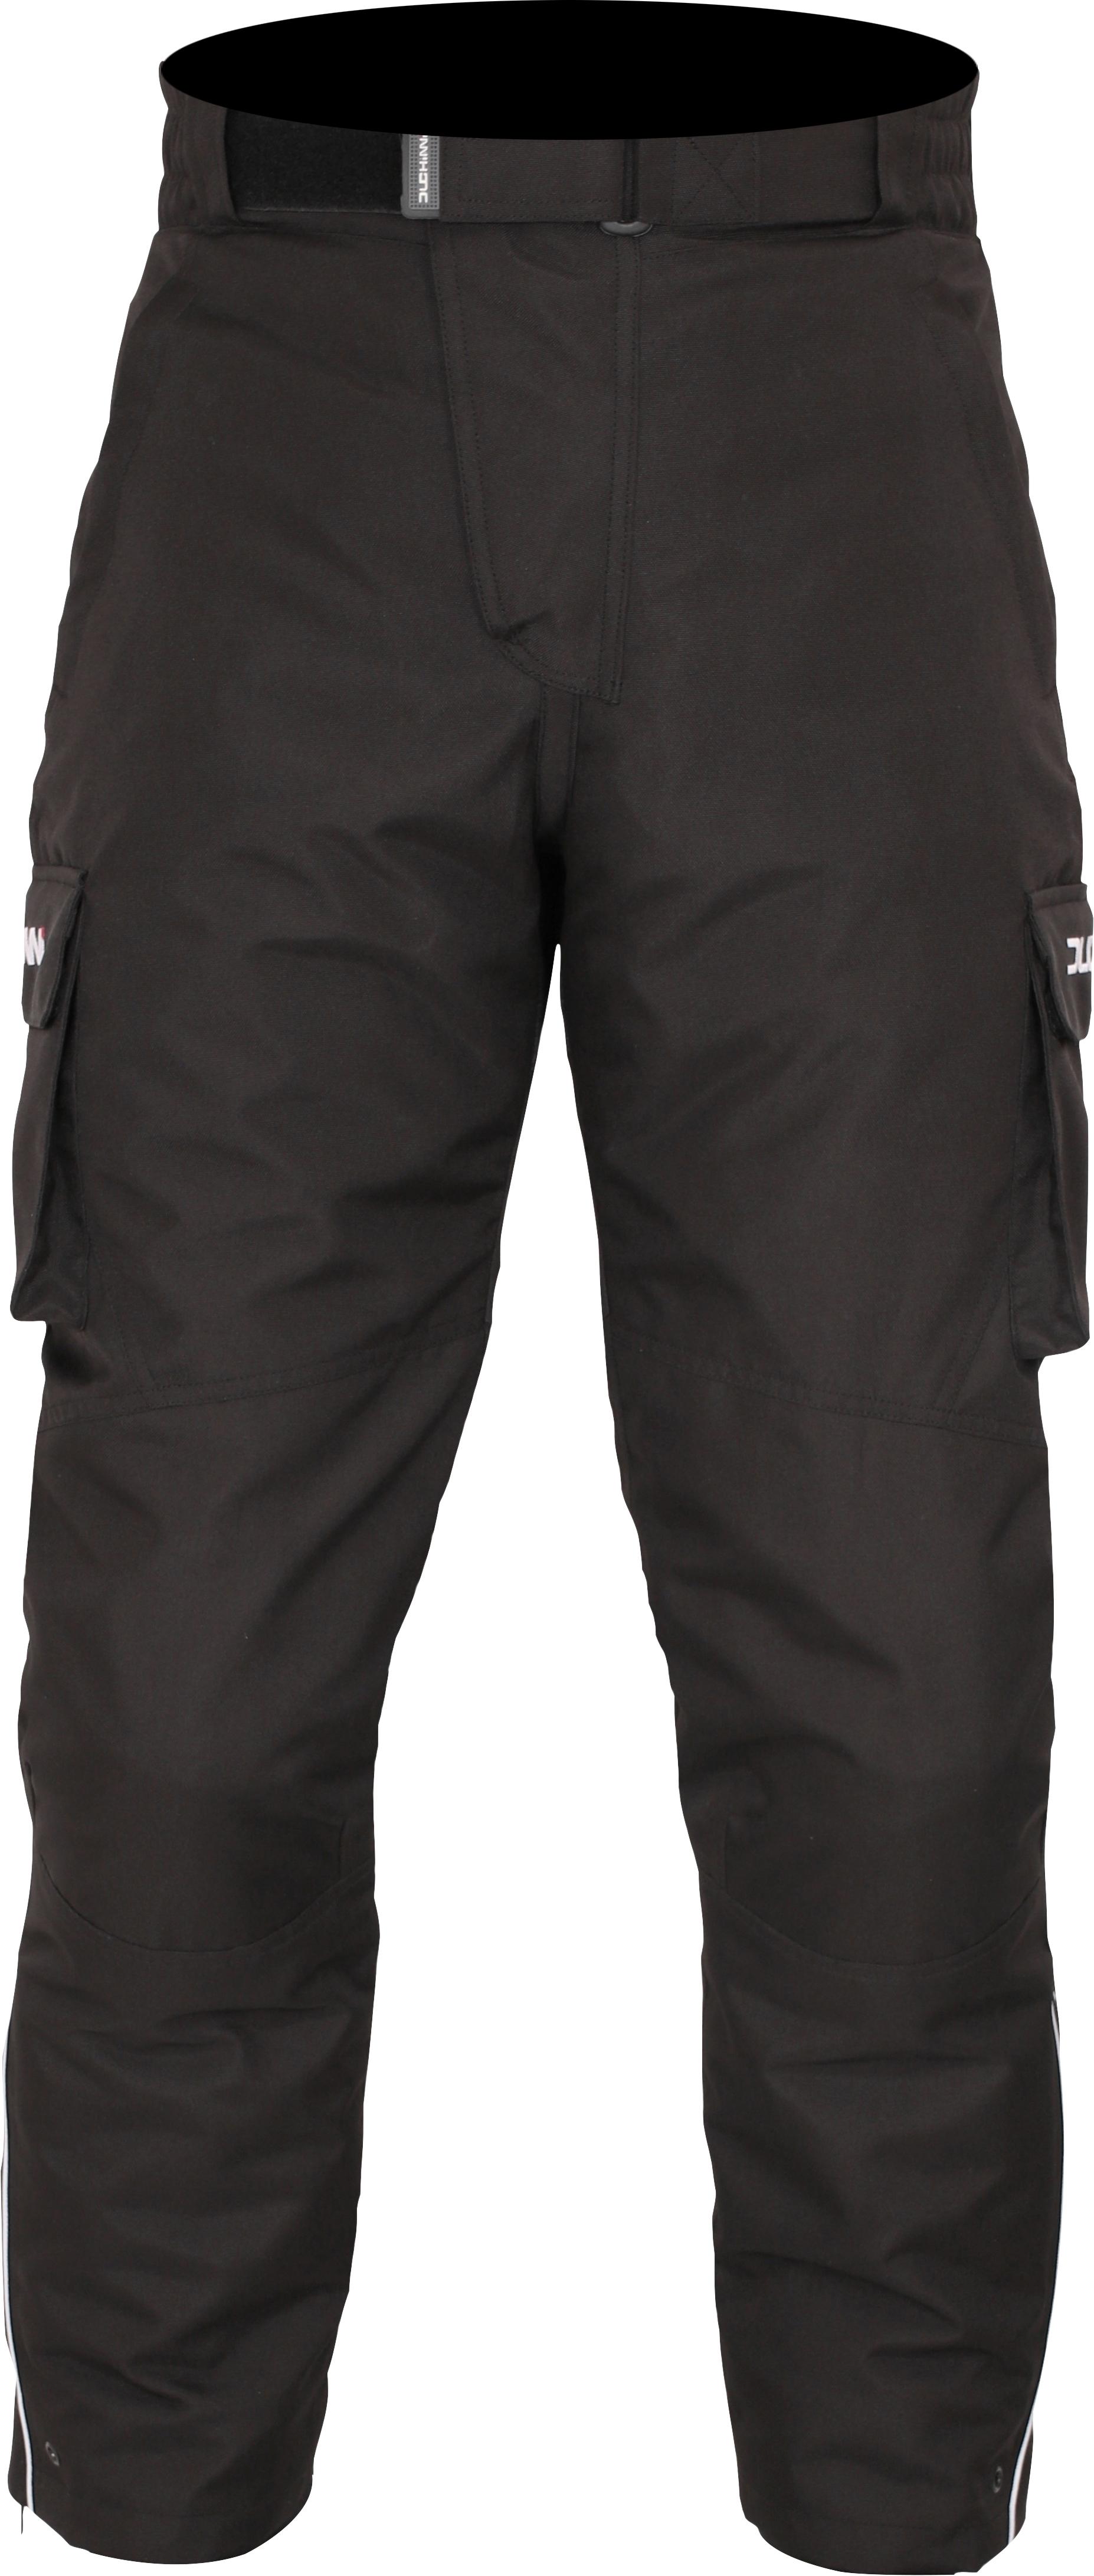 Duchinni Pacific Motorcycle Short Jeans - Black, 8Xl